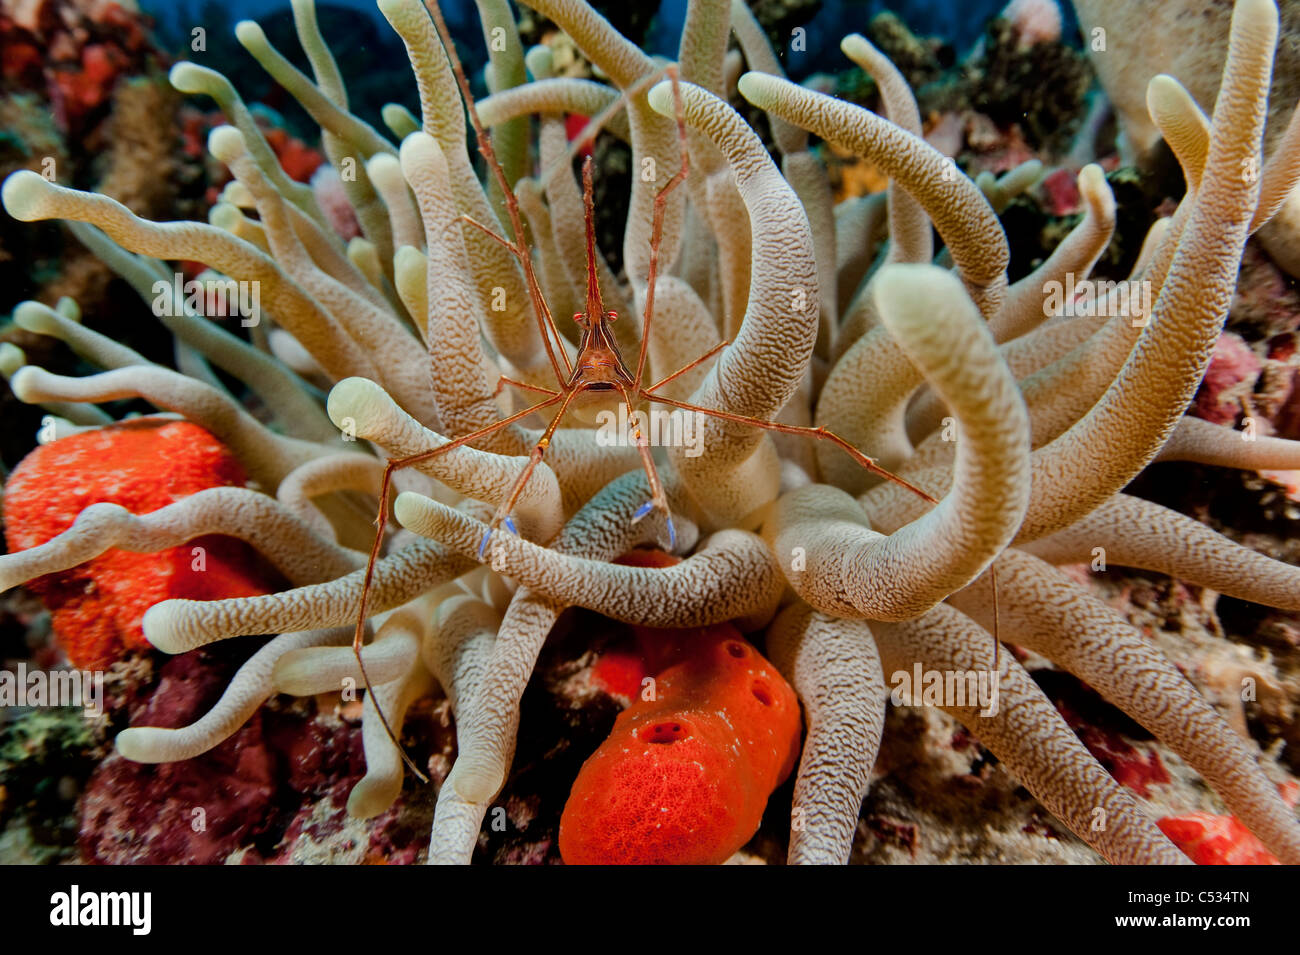 Arrow Crab (Stenorhynchus seticornis) photographed inside a sea anemone (Condylactis gigantea) offshore Palm Beach, FL. Stock Photo